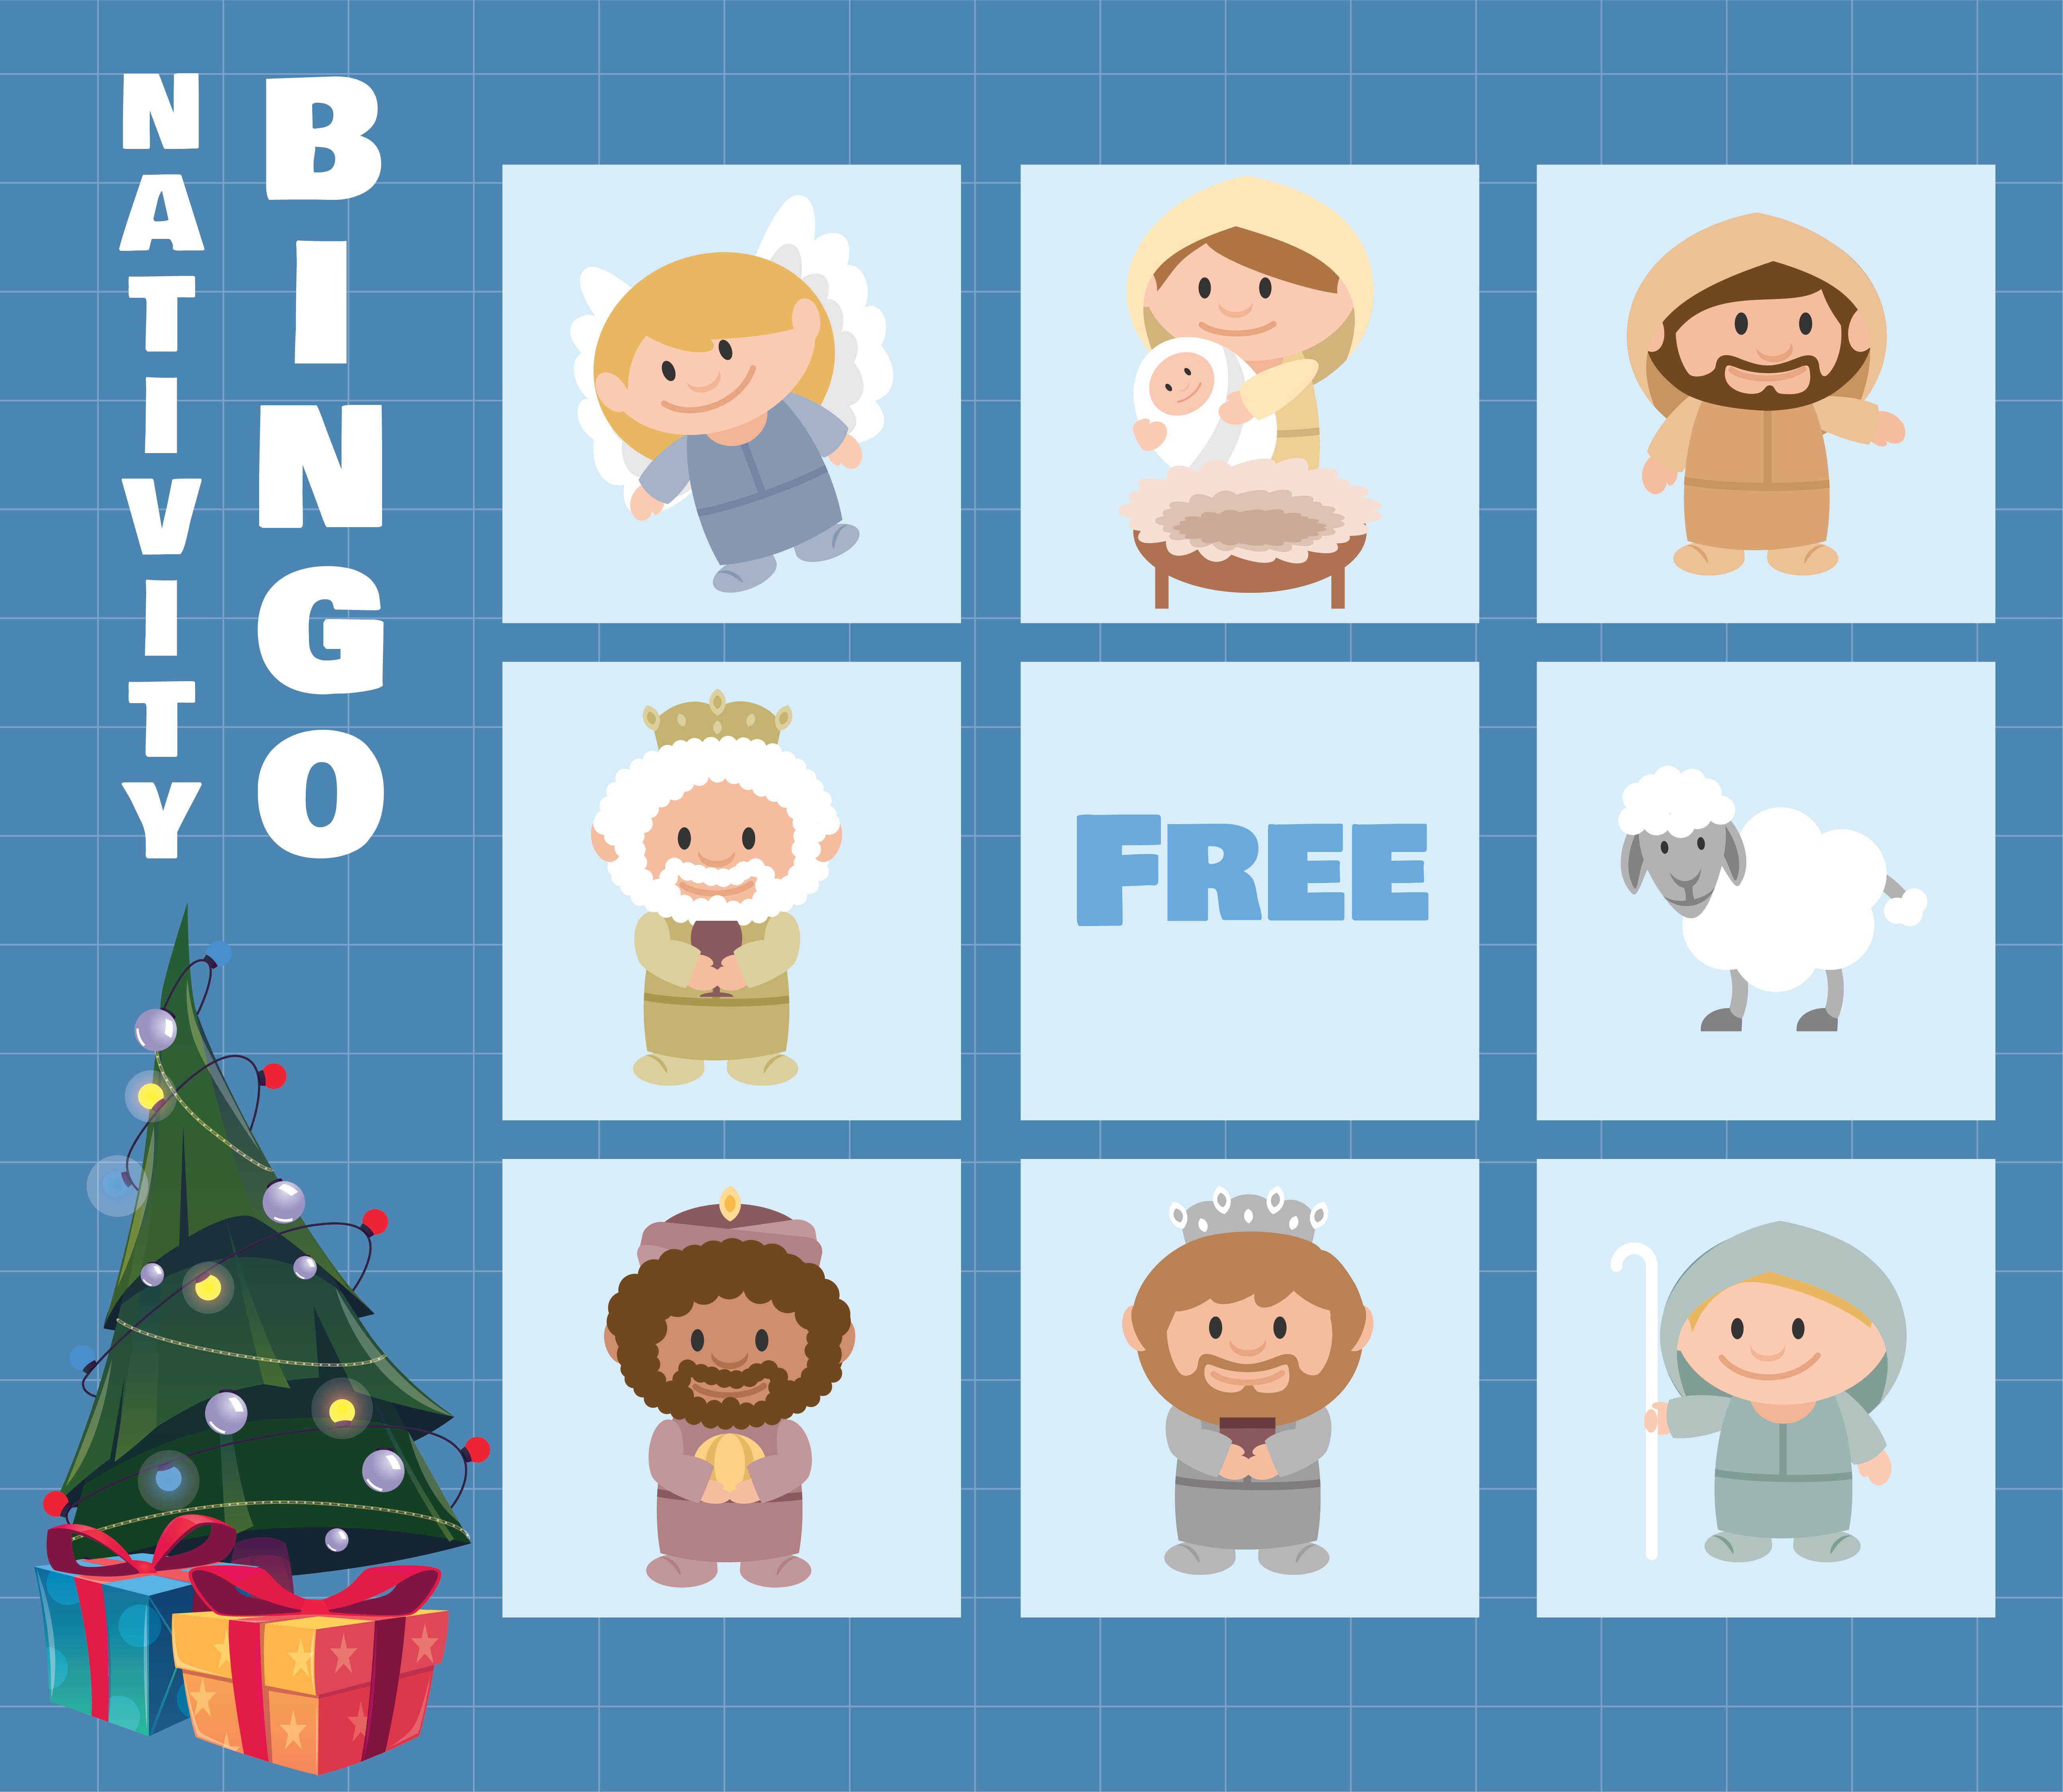 Printable Nativity Bingo Cards